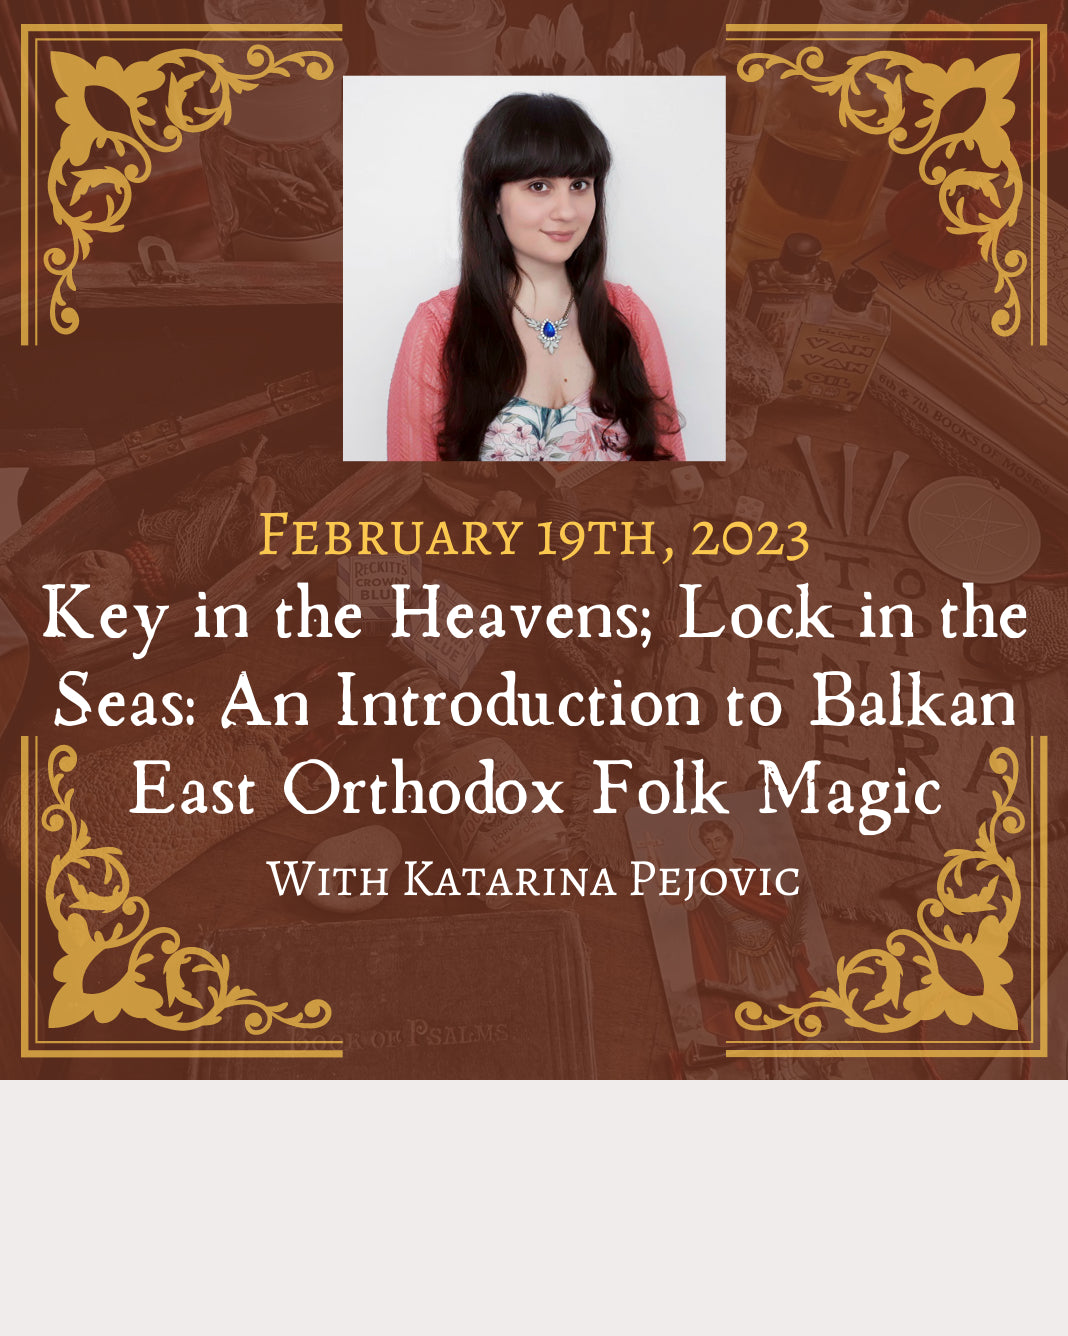 Key in the Heavens; Lock in the Seas: An Introduction to Balkan East Orthodox Folk Magic with Katarina Pejovic